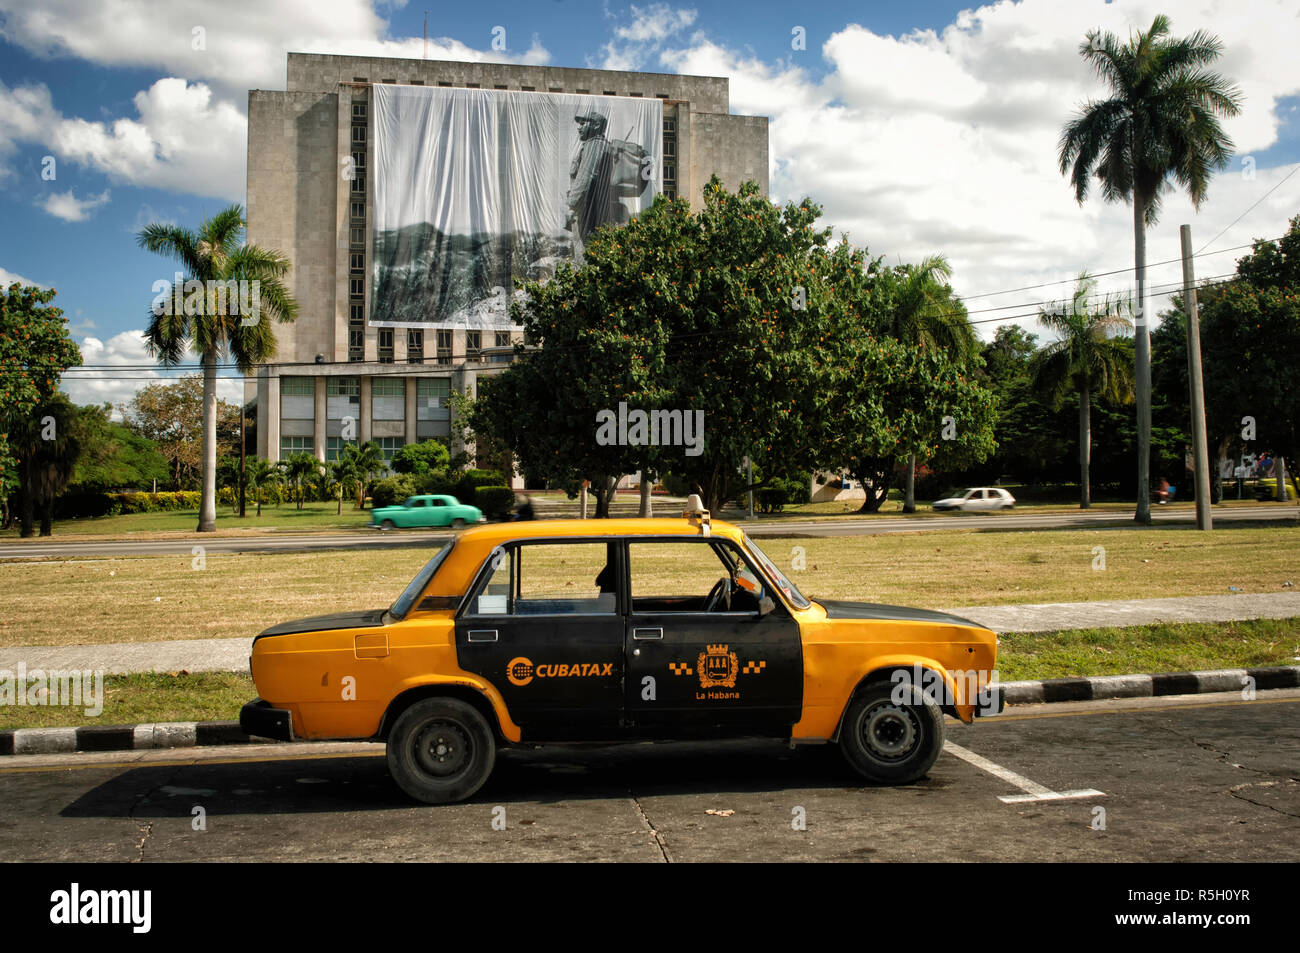 Cuban taxi at the Plaza de la Revolución, days after Fidel Catstro's death. 4 December 2016 Stock Photo